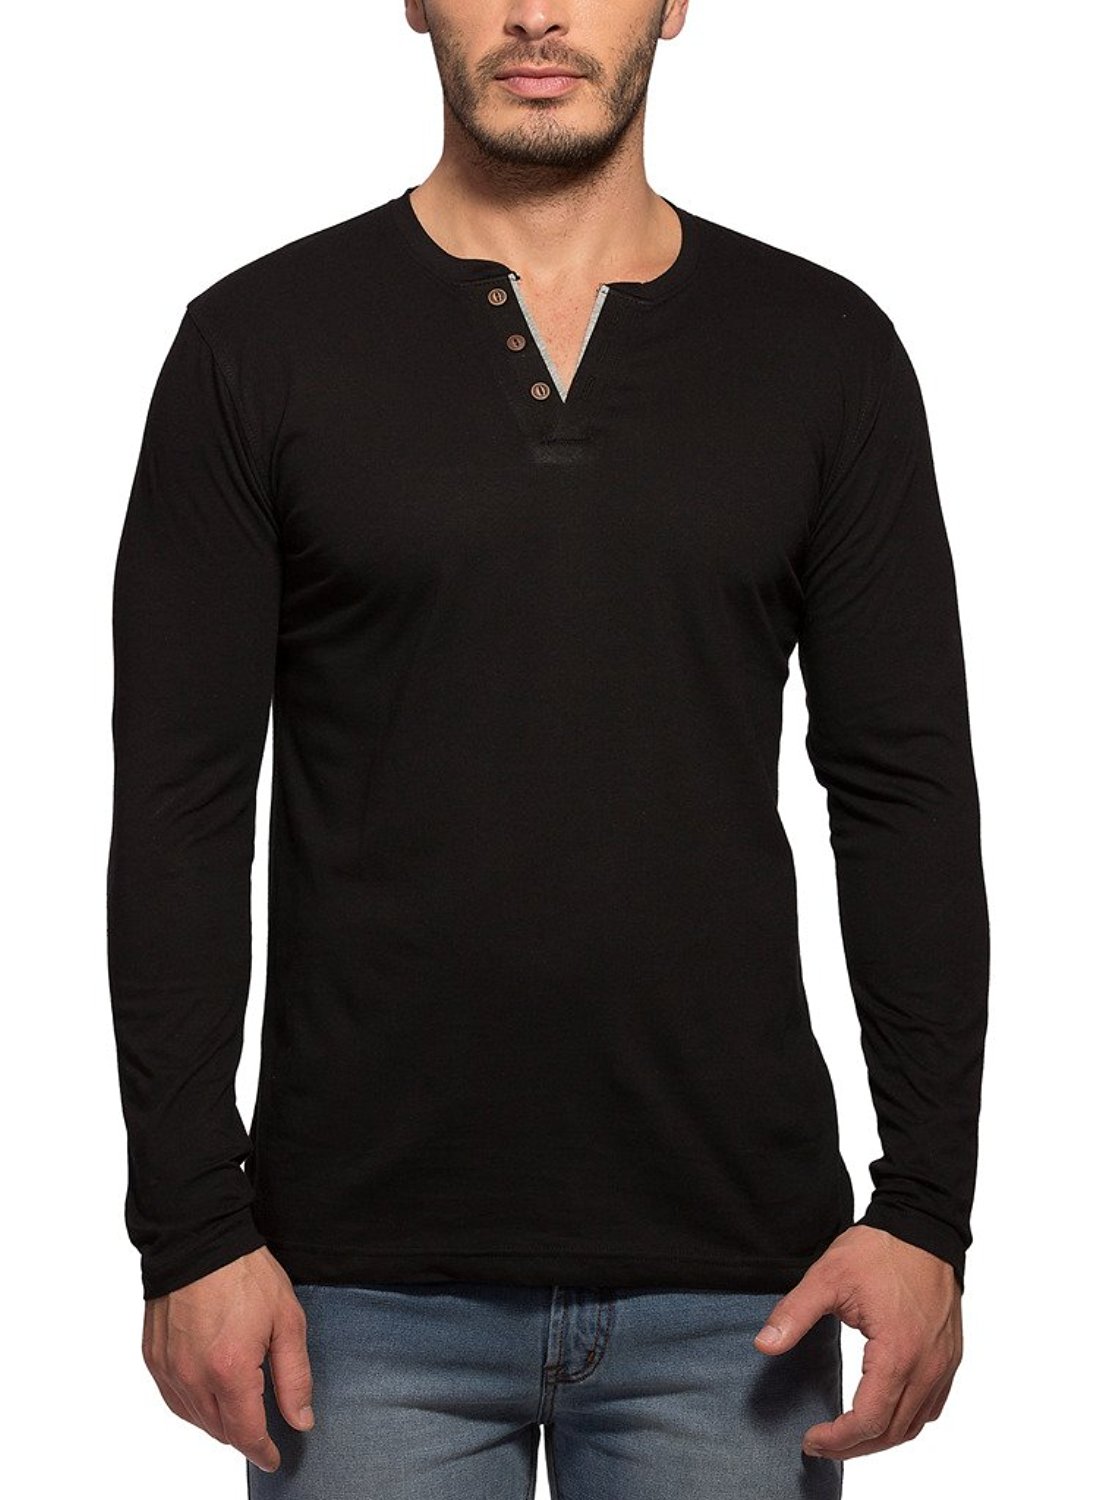 Maniac Men's Full Sleeve V-Neck Tshirts Combo Pack of 3 | Best Price